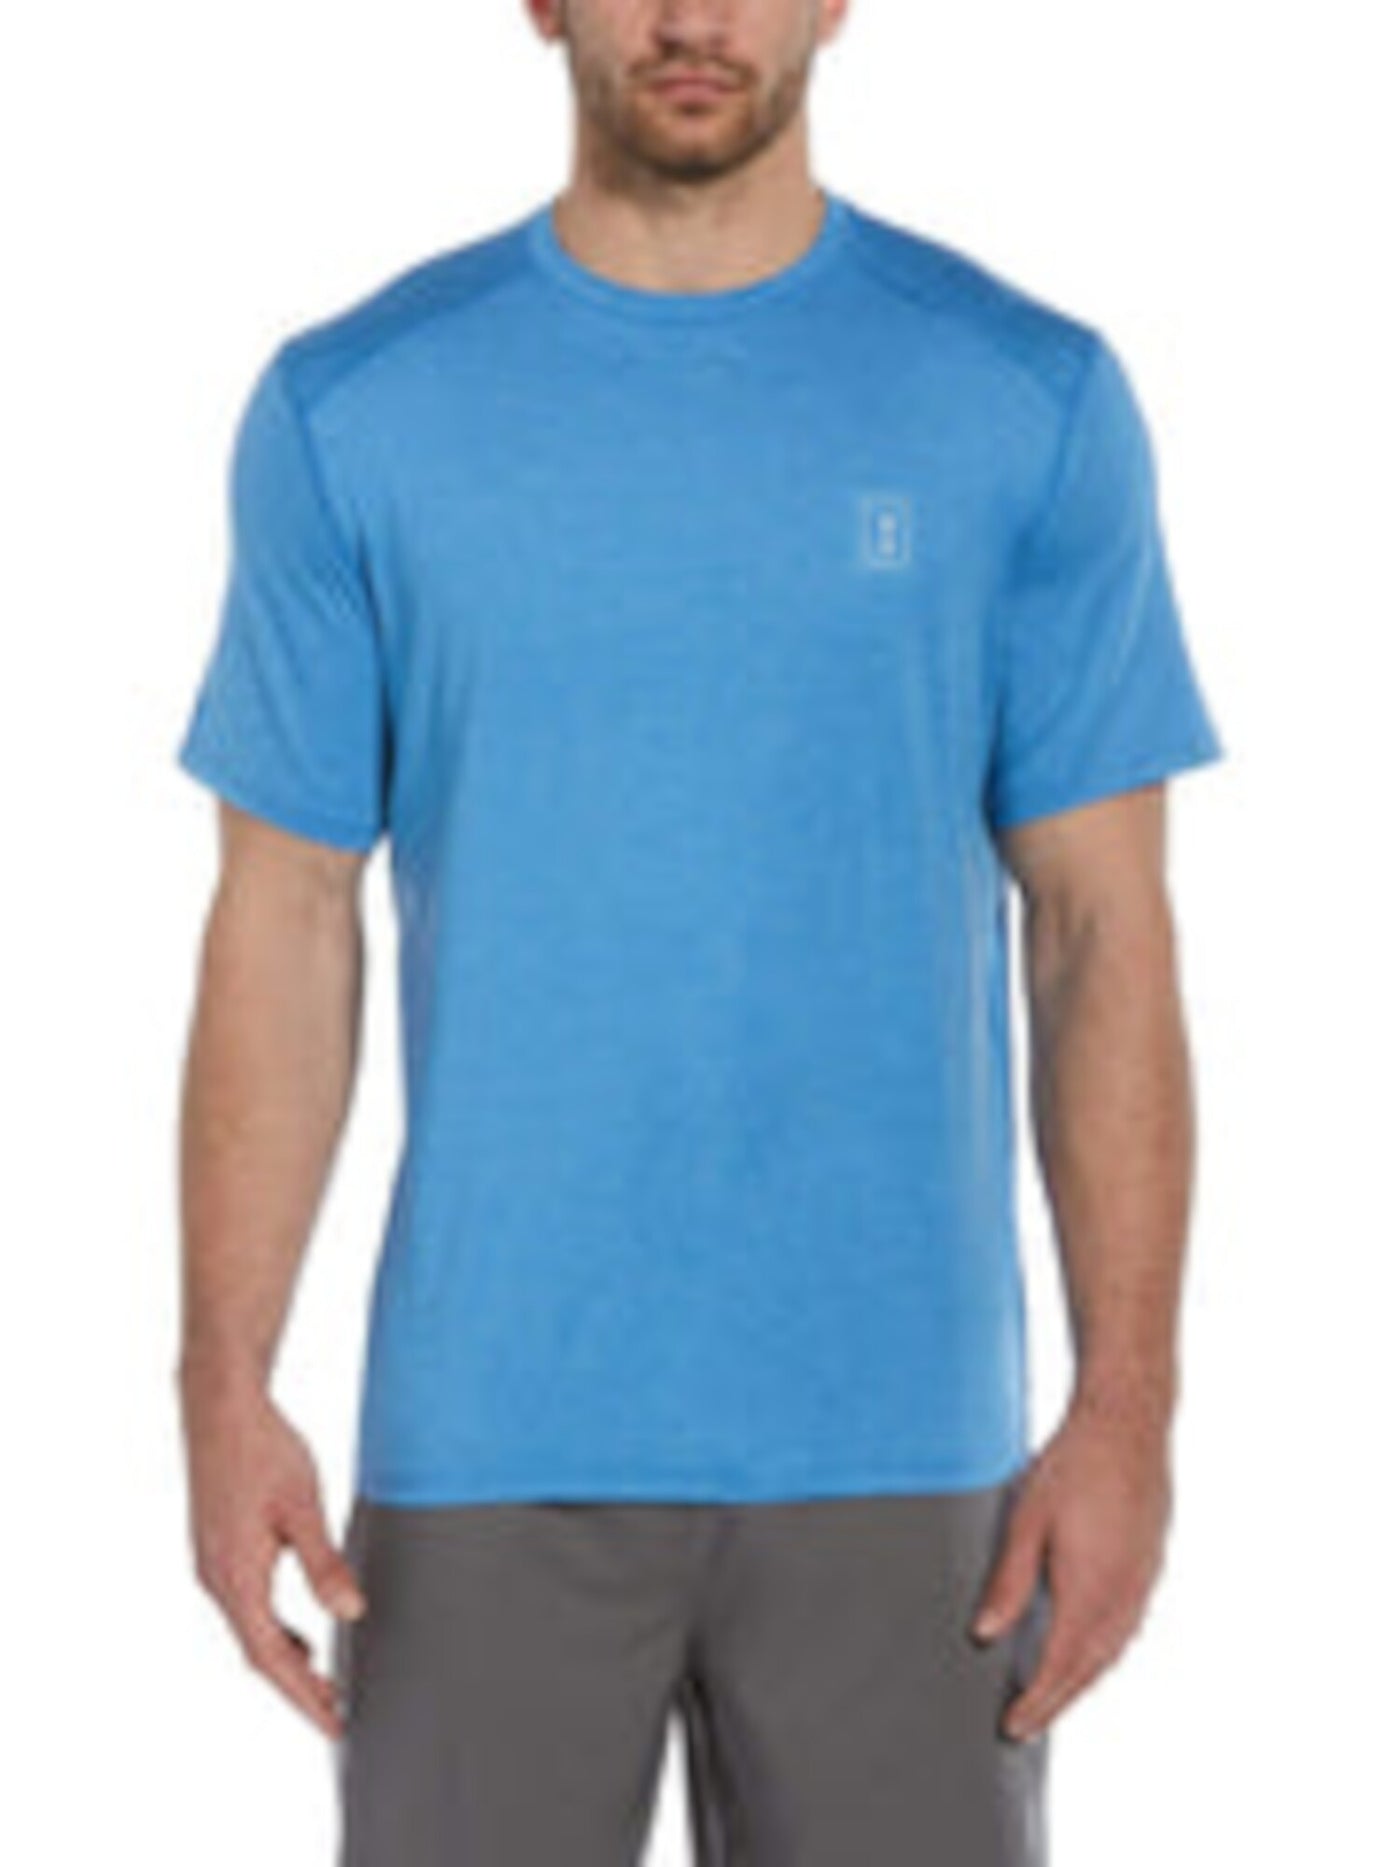 HYBRID APPAREL Mens Blue Stretch T-Shirt XL